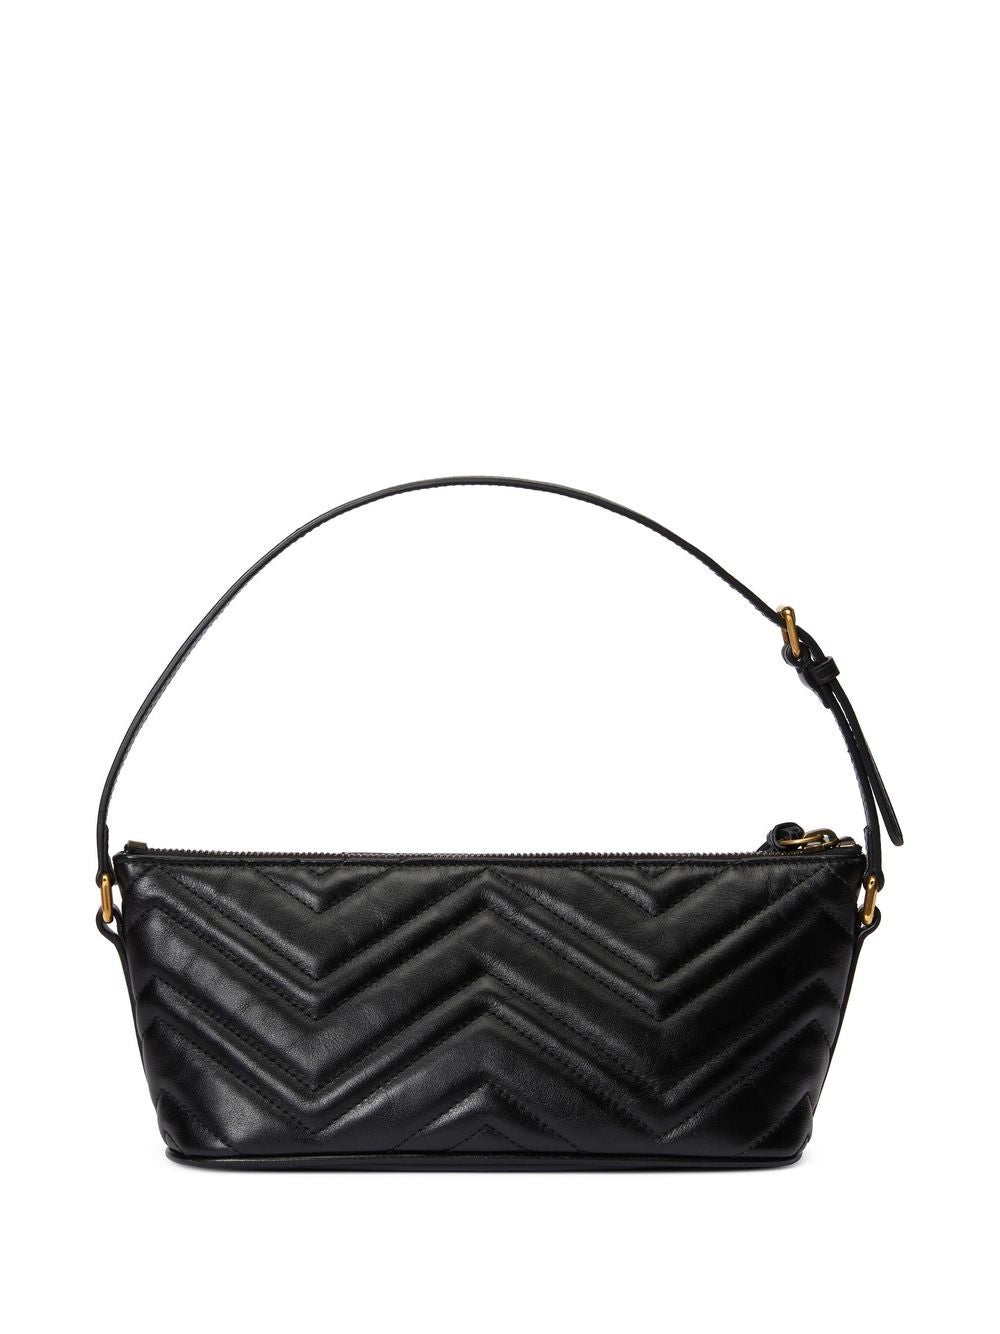 Gucci, Marmont Leather Shoulder Bag